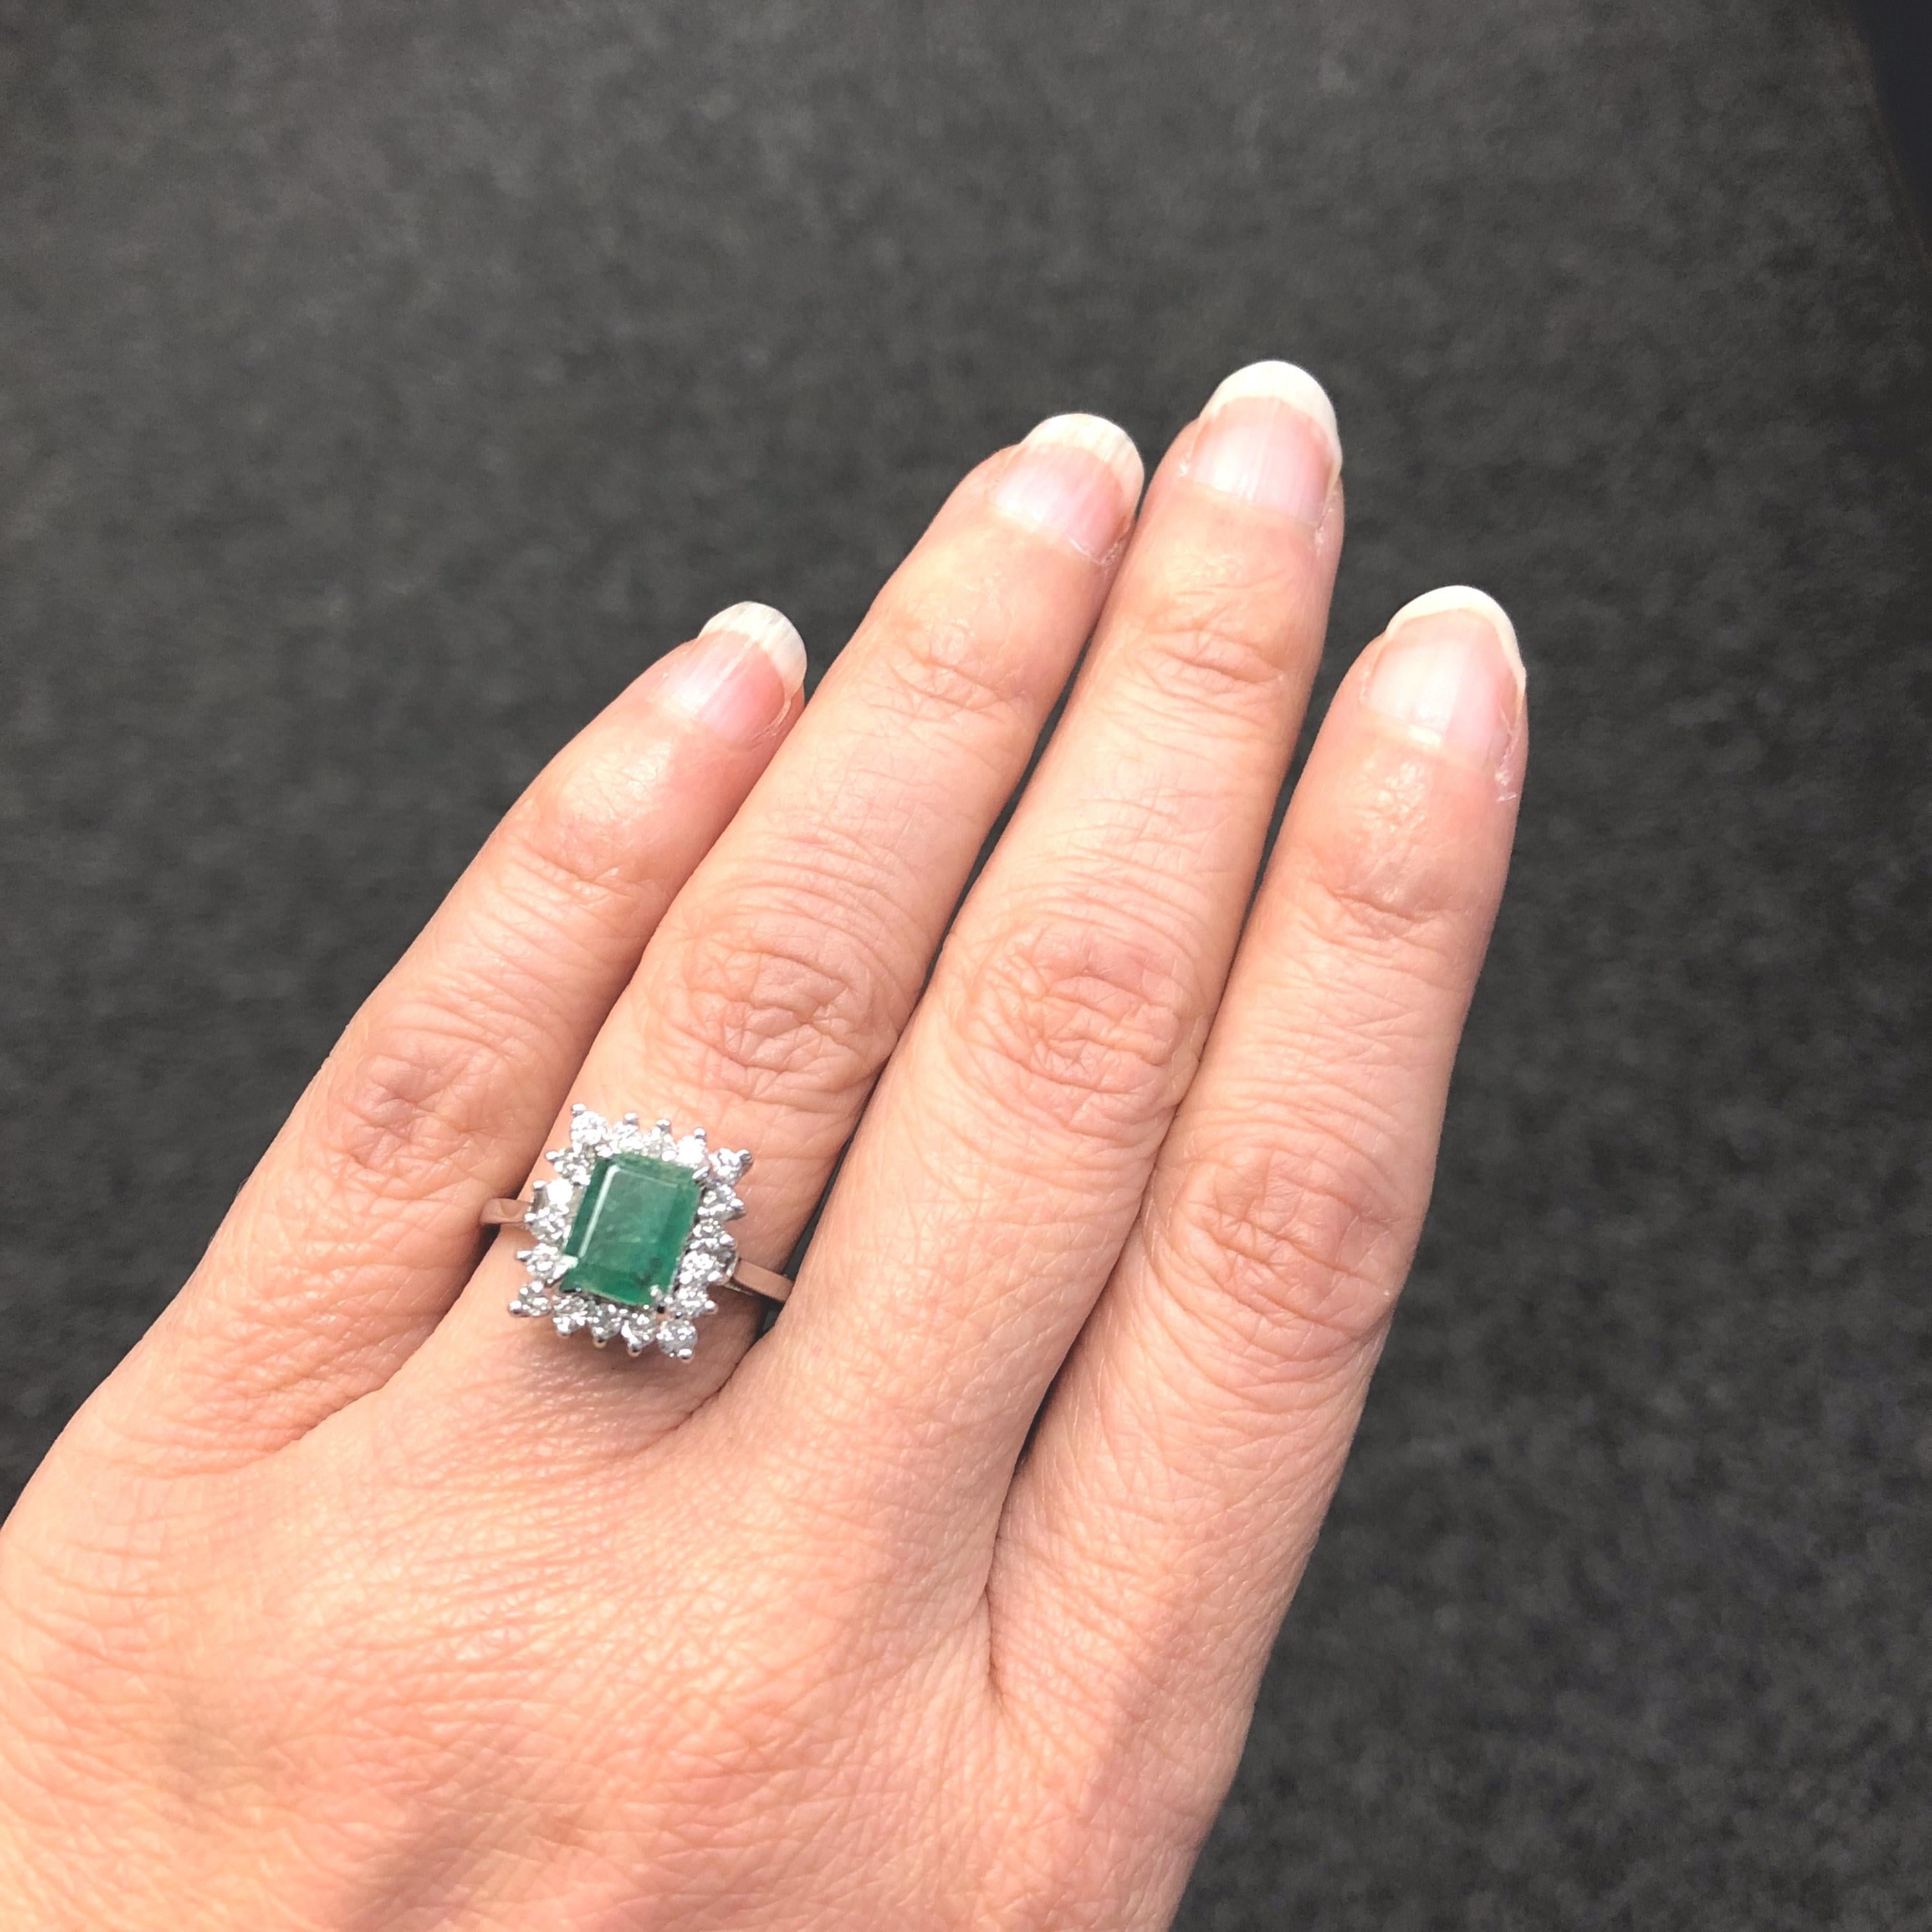 14kt Emerald Cut Emerald Ring with Diamond Halo 2